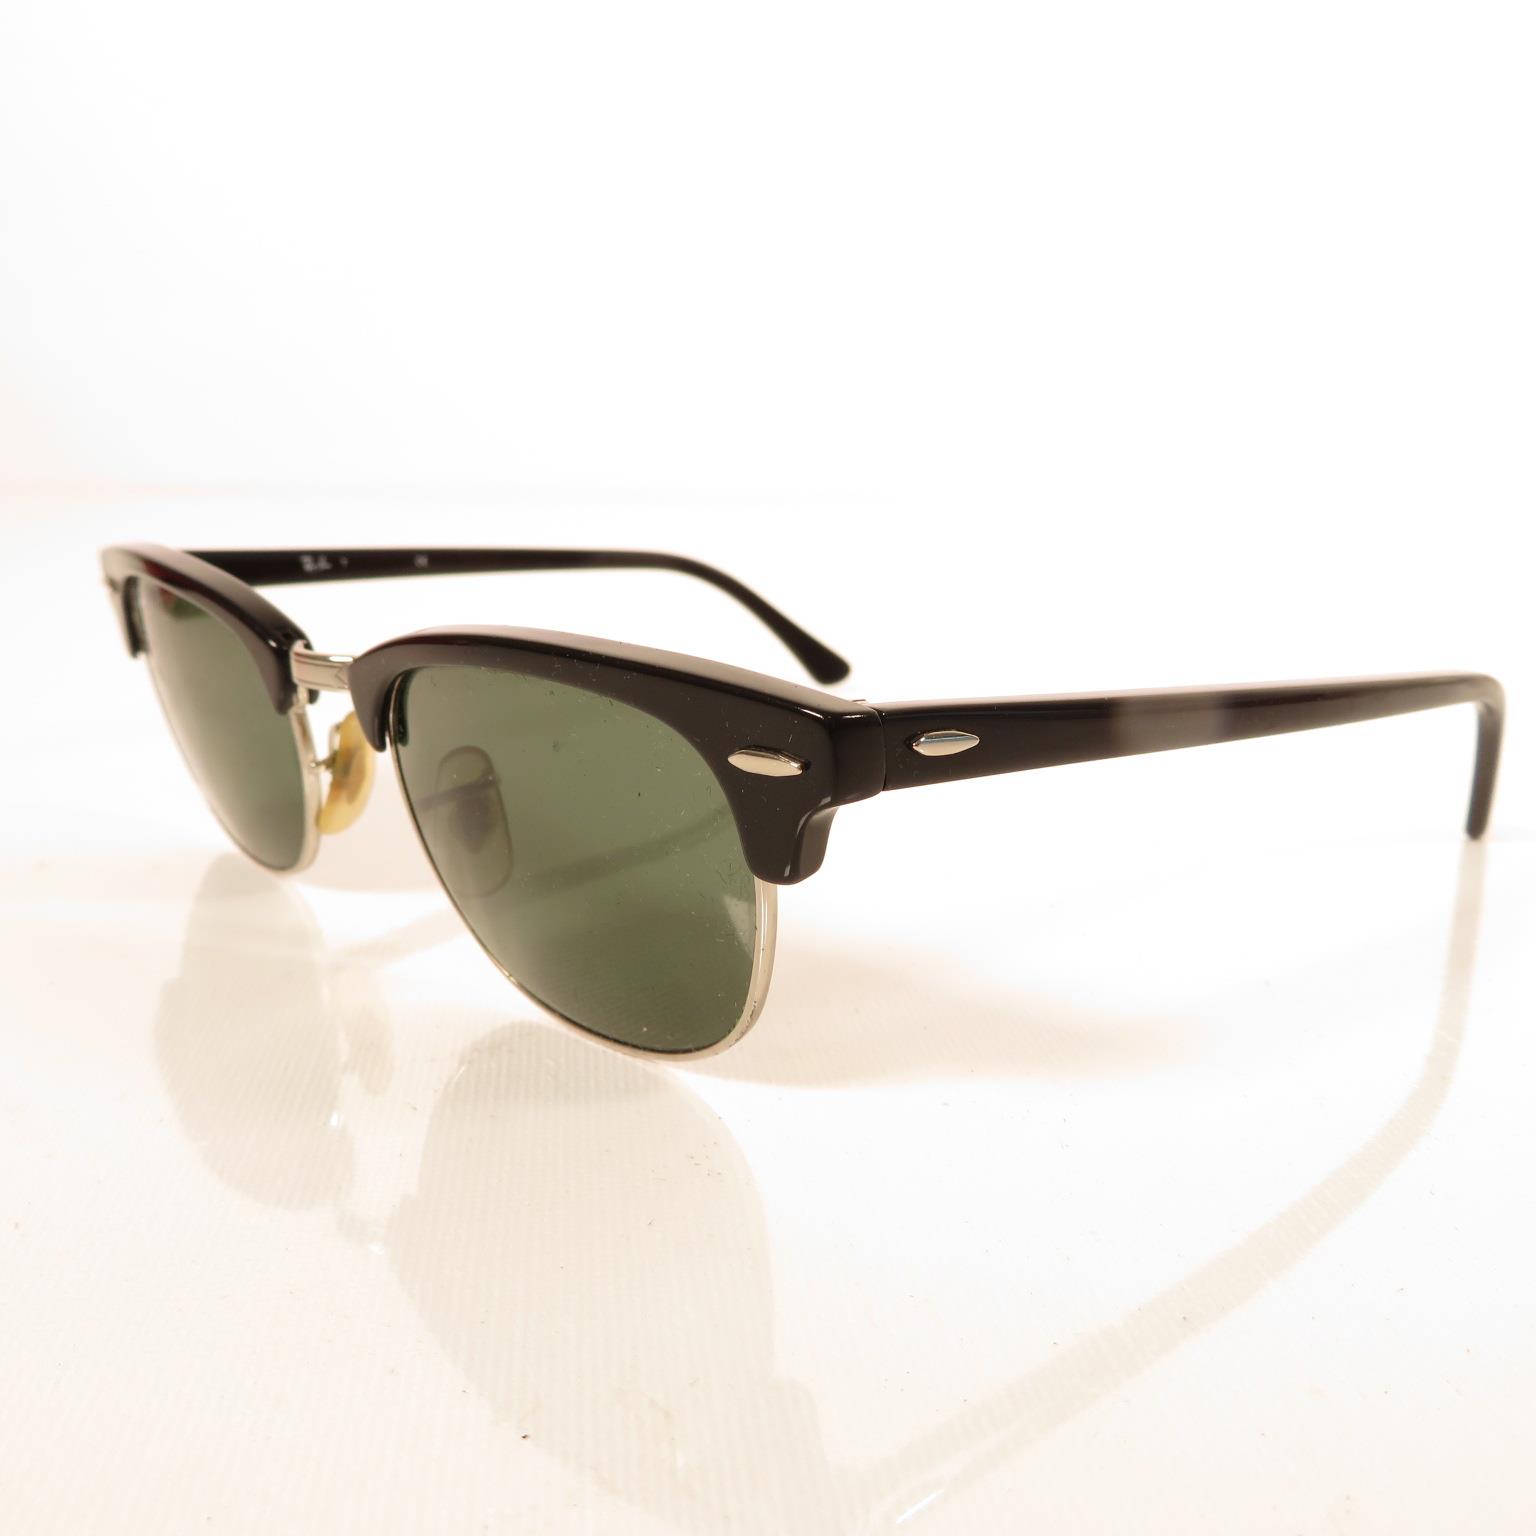 6x pairs Ray Ban sunglasses - - Image 24 of 31